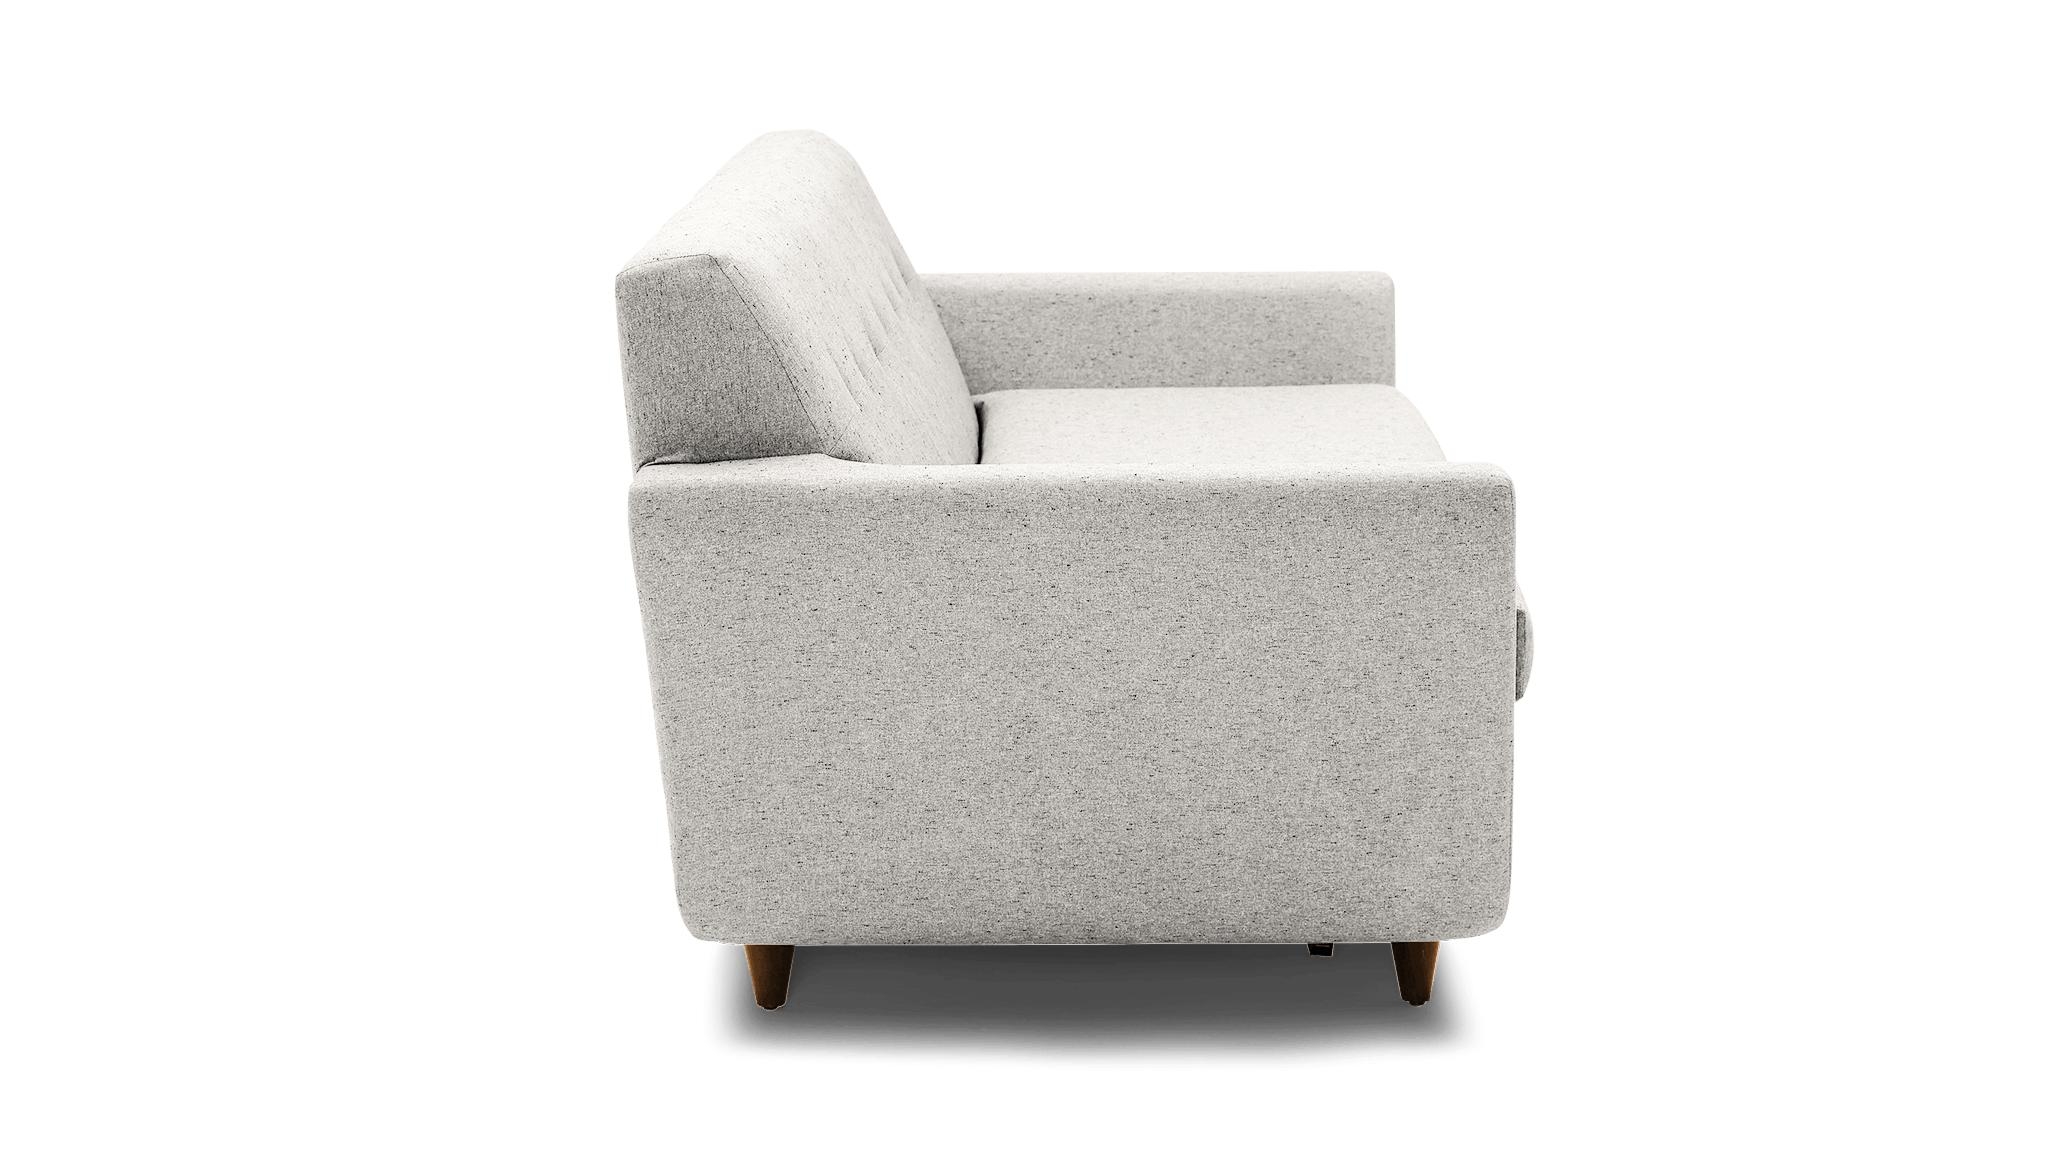 White Hughes Mid Century Modern Sleeper Sofa - Tussah Snow - Mocha - Image 2